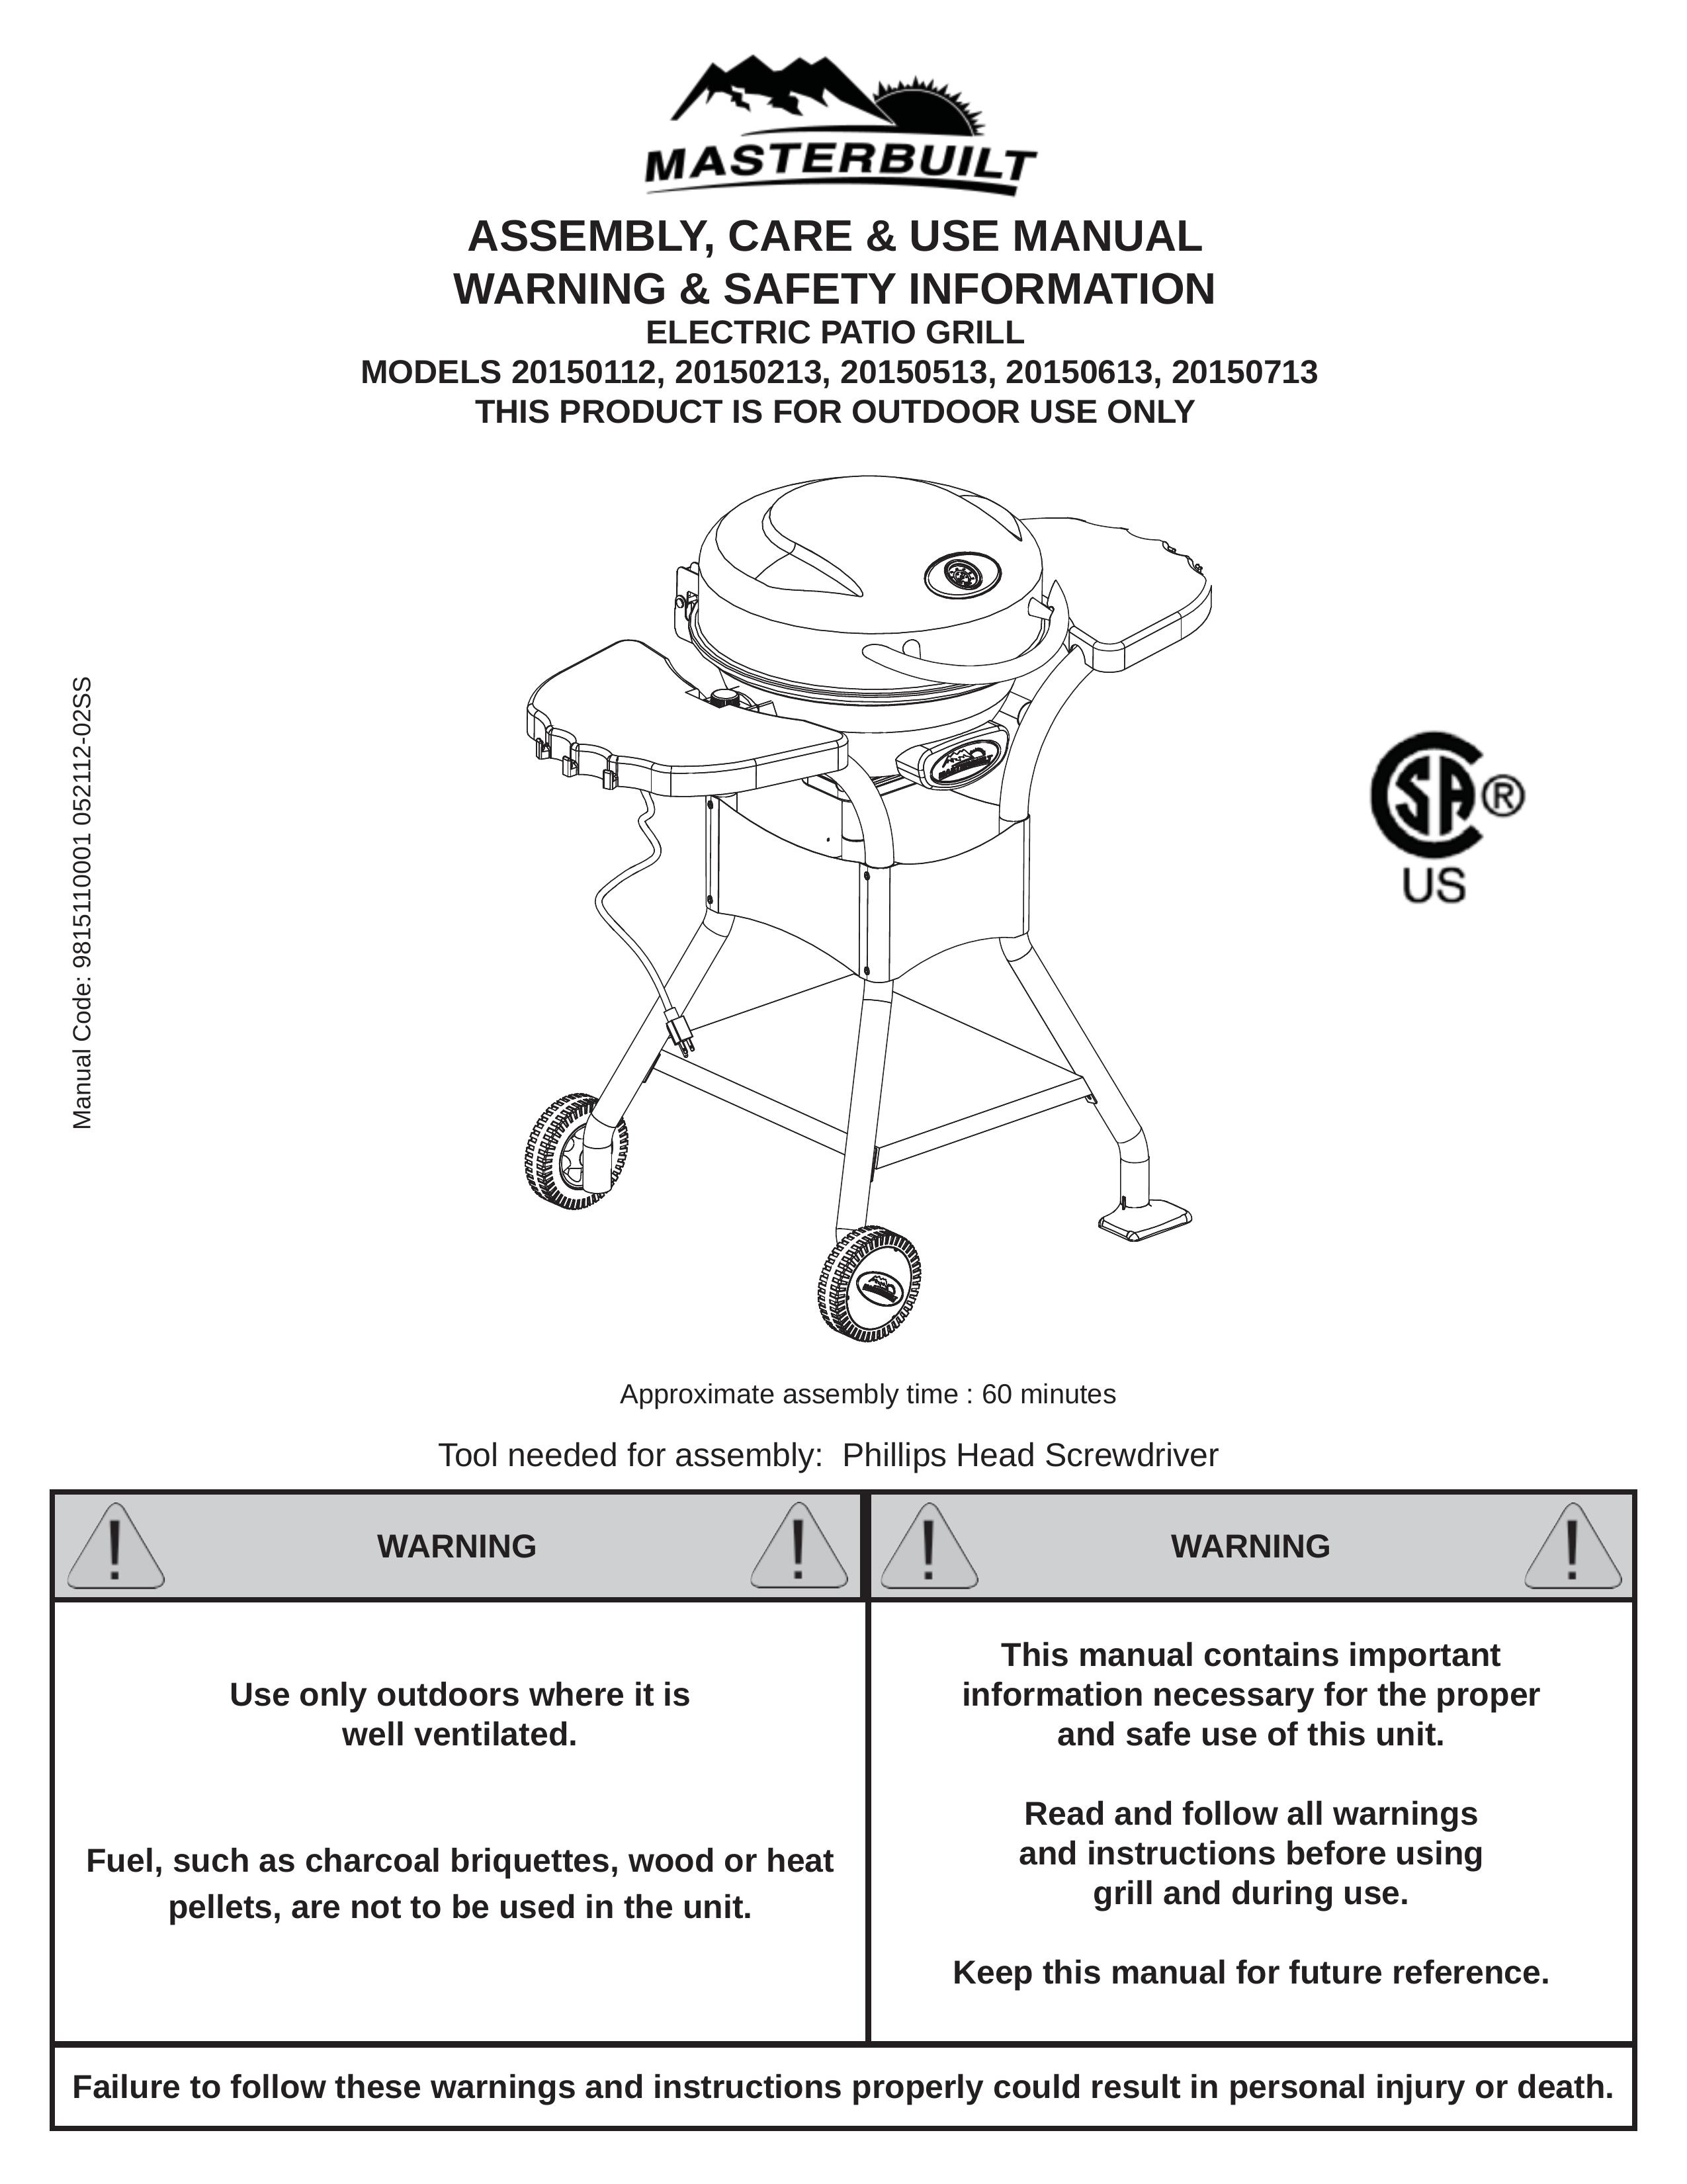 Master Bilt 20150112 Electric Grill User Manual